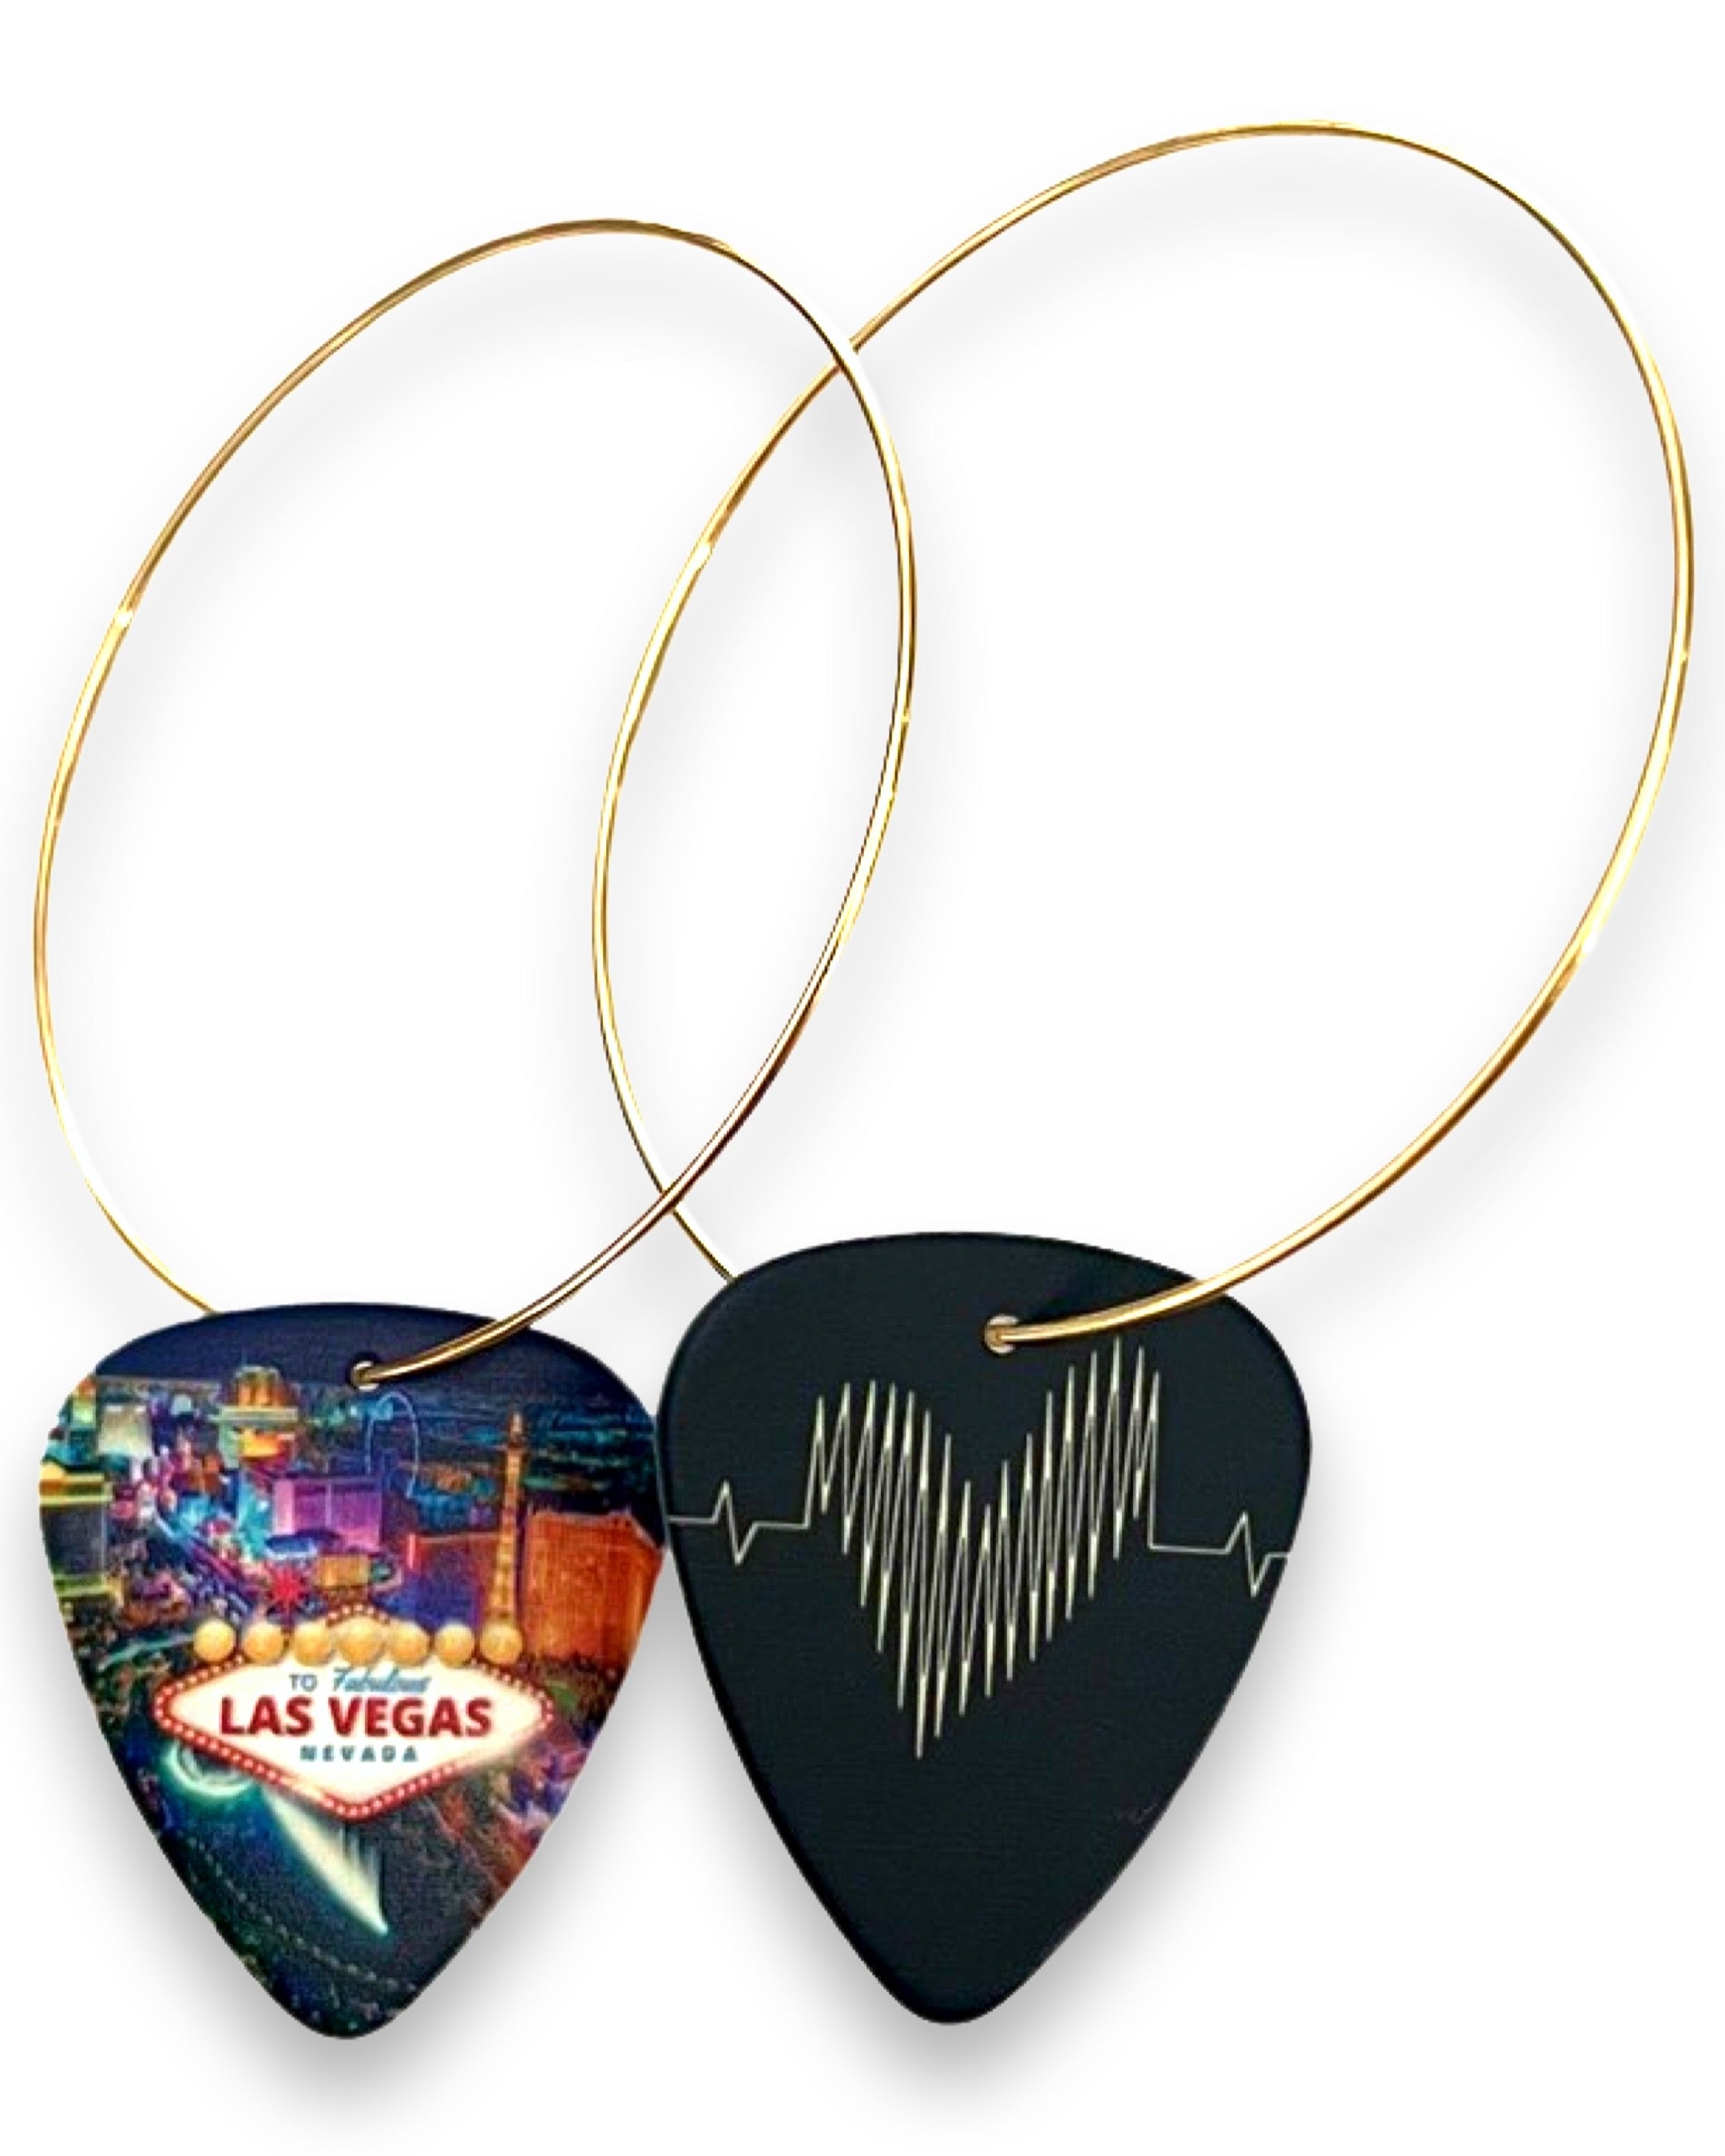 Las Vegas Colorful City Reversible Single Guitar Pick Earrings